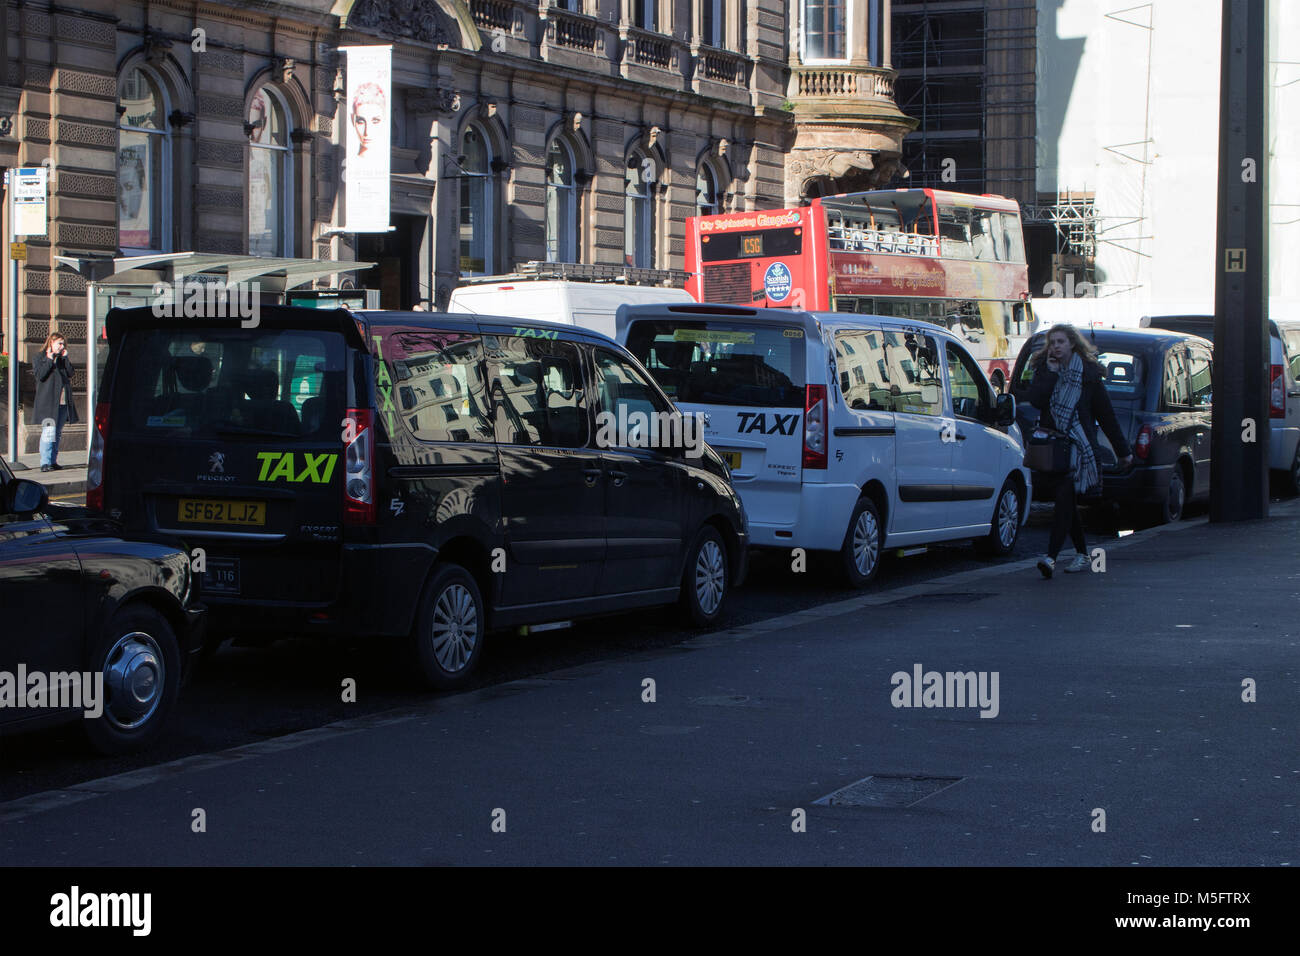 Taxis at temporary taxi rank, Glasgow, Scotland Stock Photo